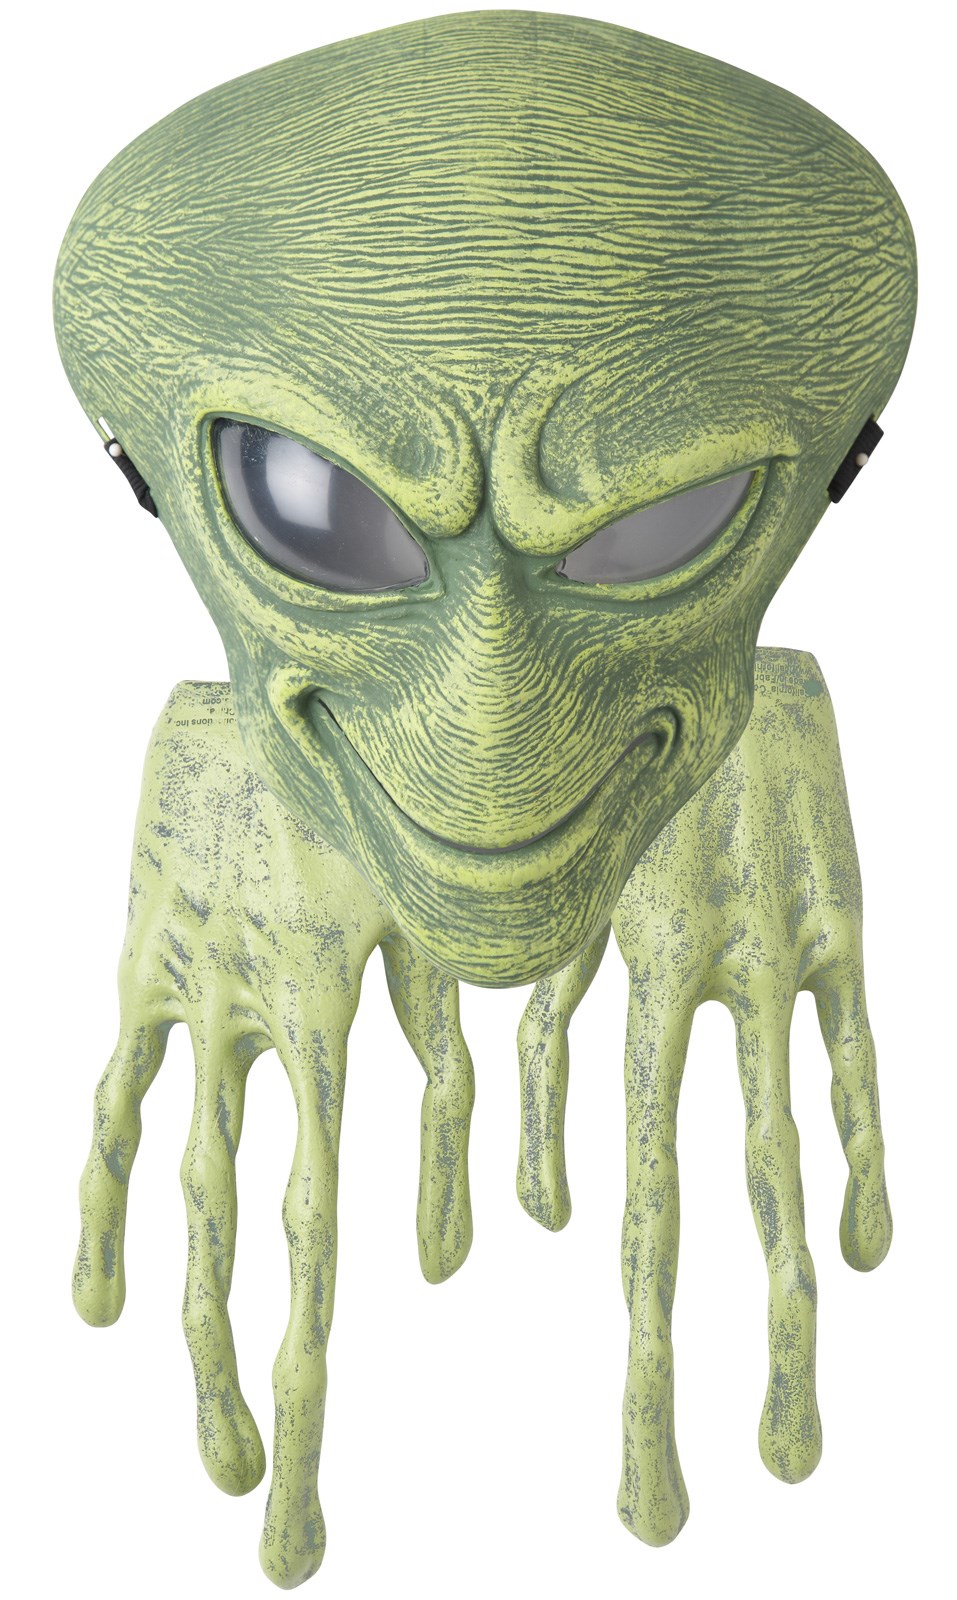 Alien Mask And Glove Set